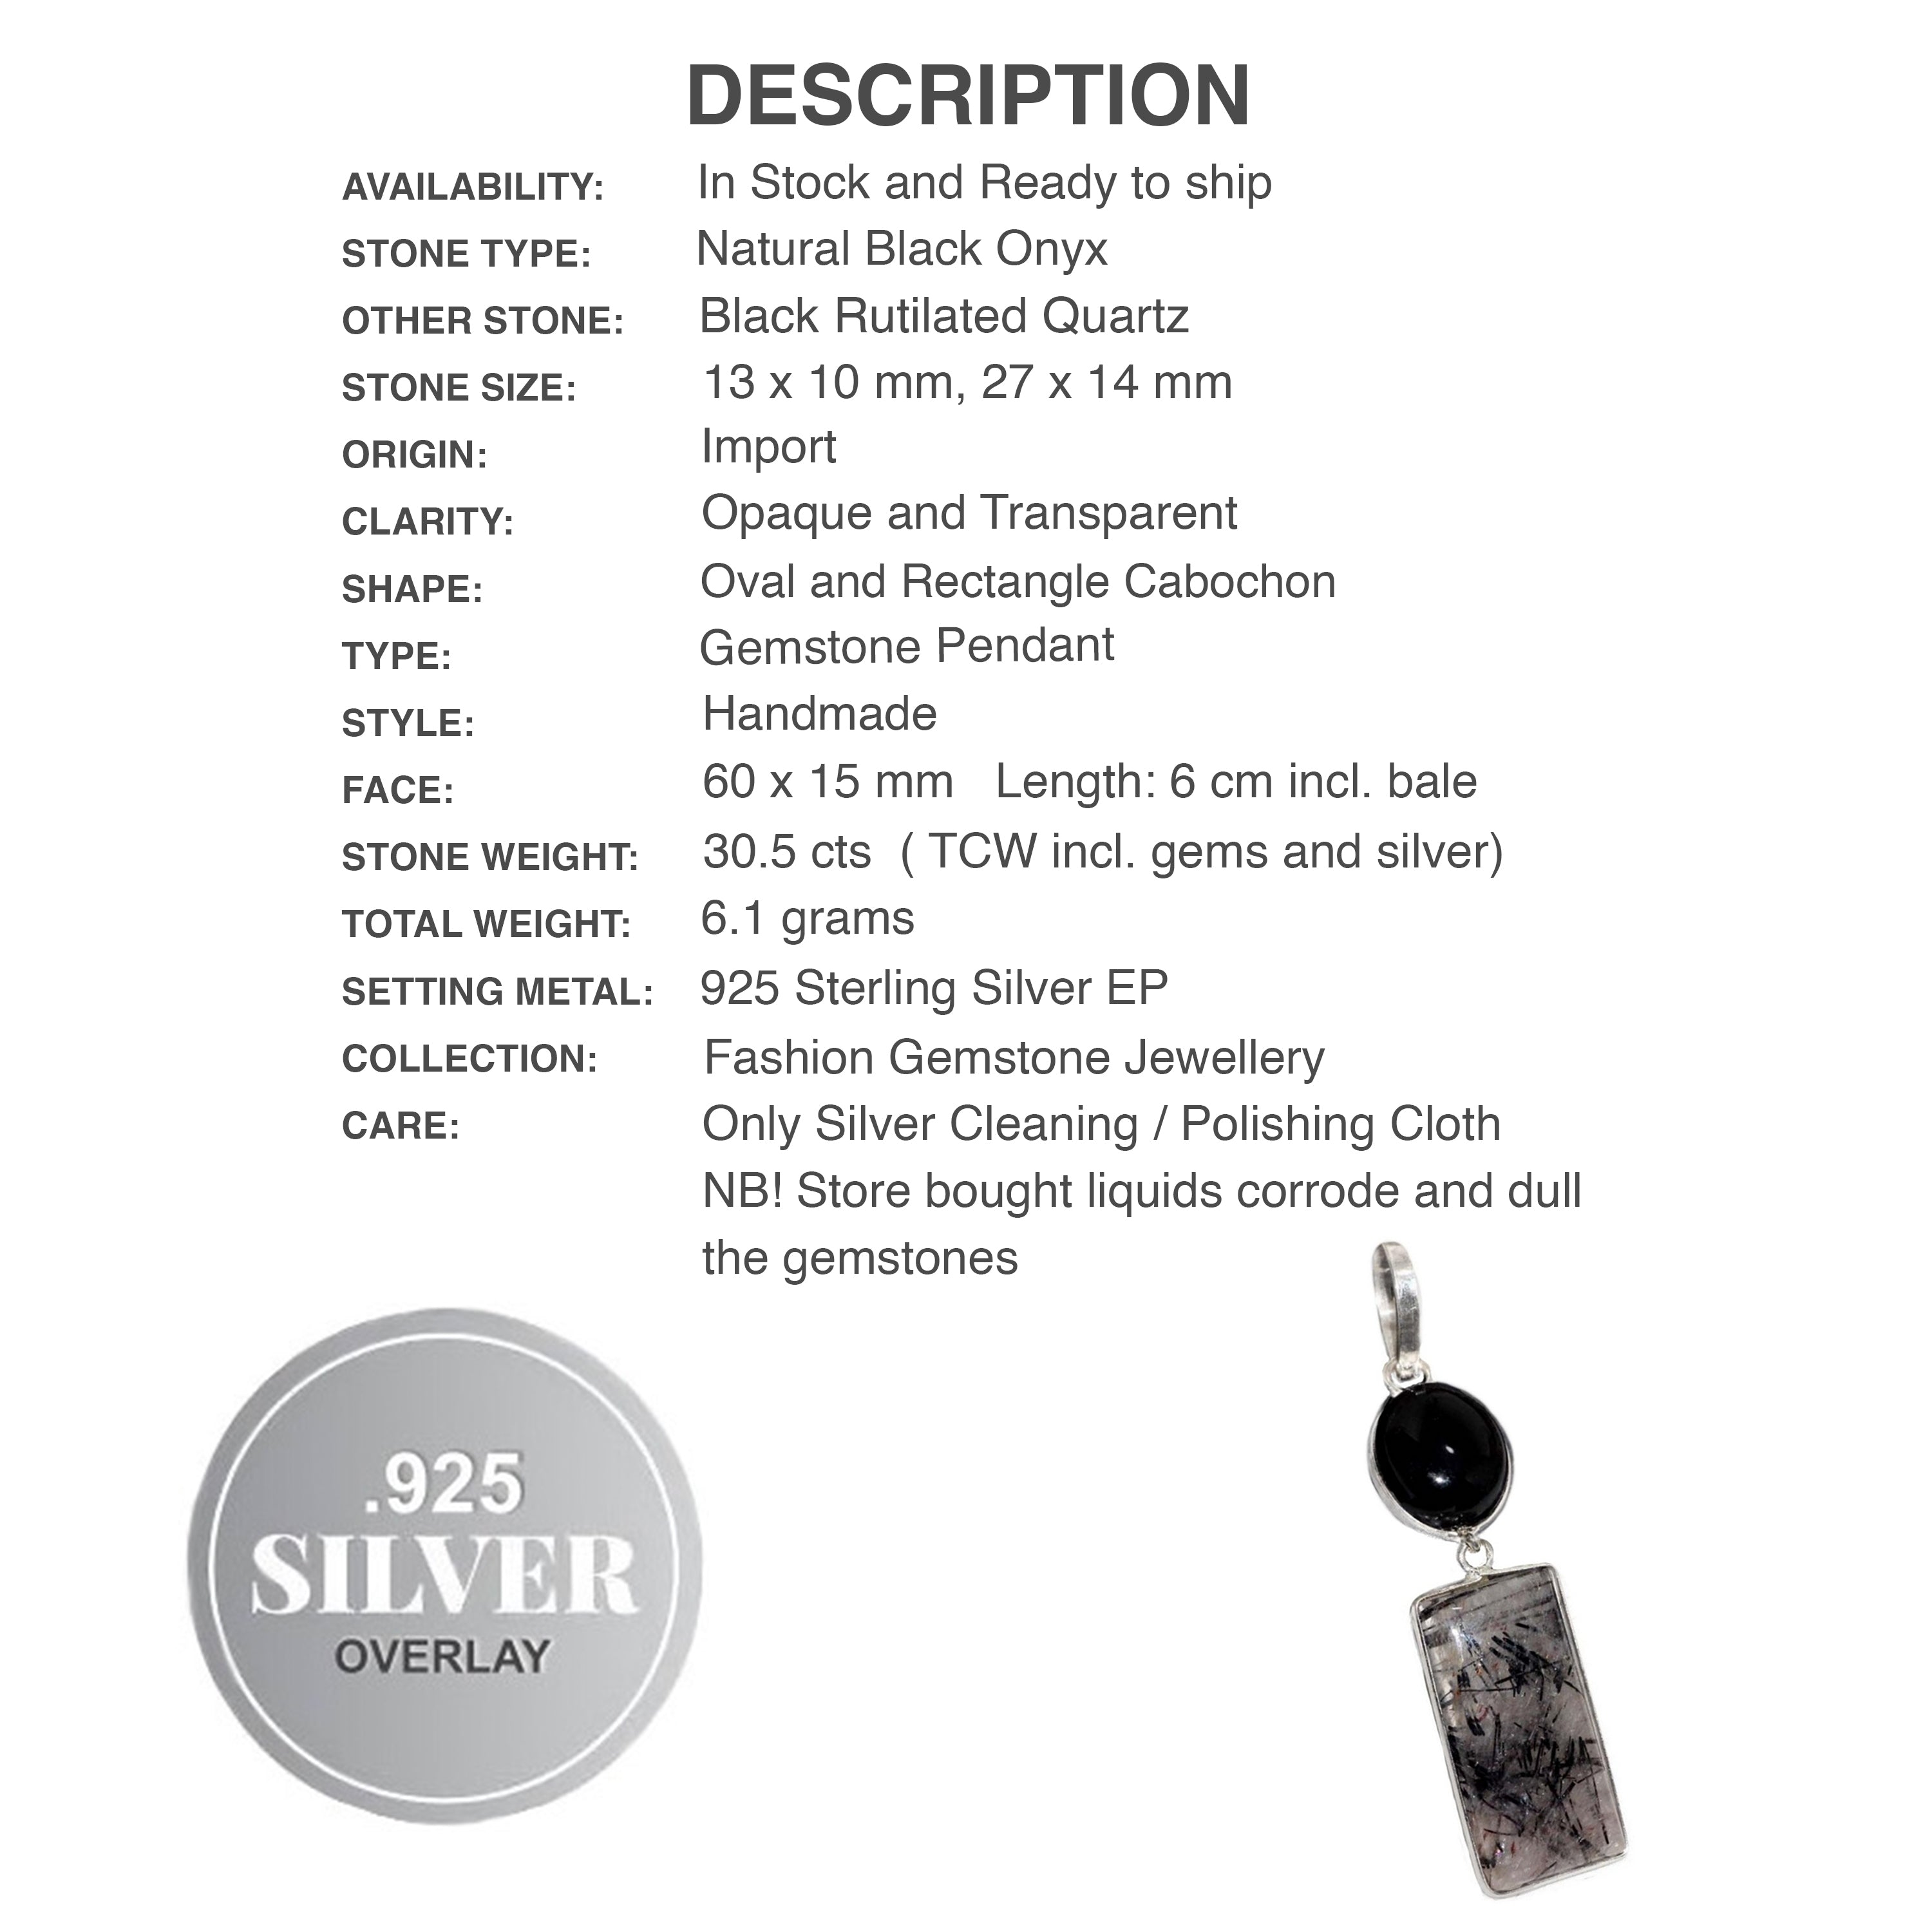 Handmade Black Onyx and Black Rutile Quartz Gemstone .925 Sterling Silver Pendant